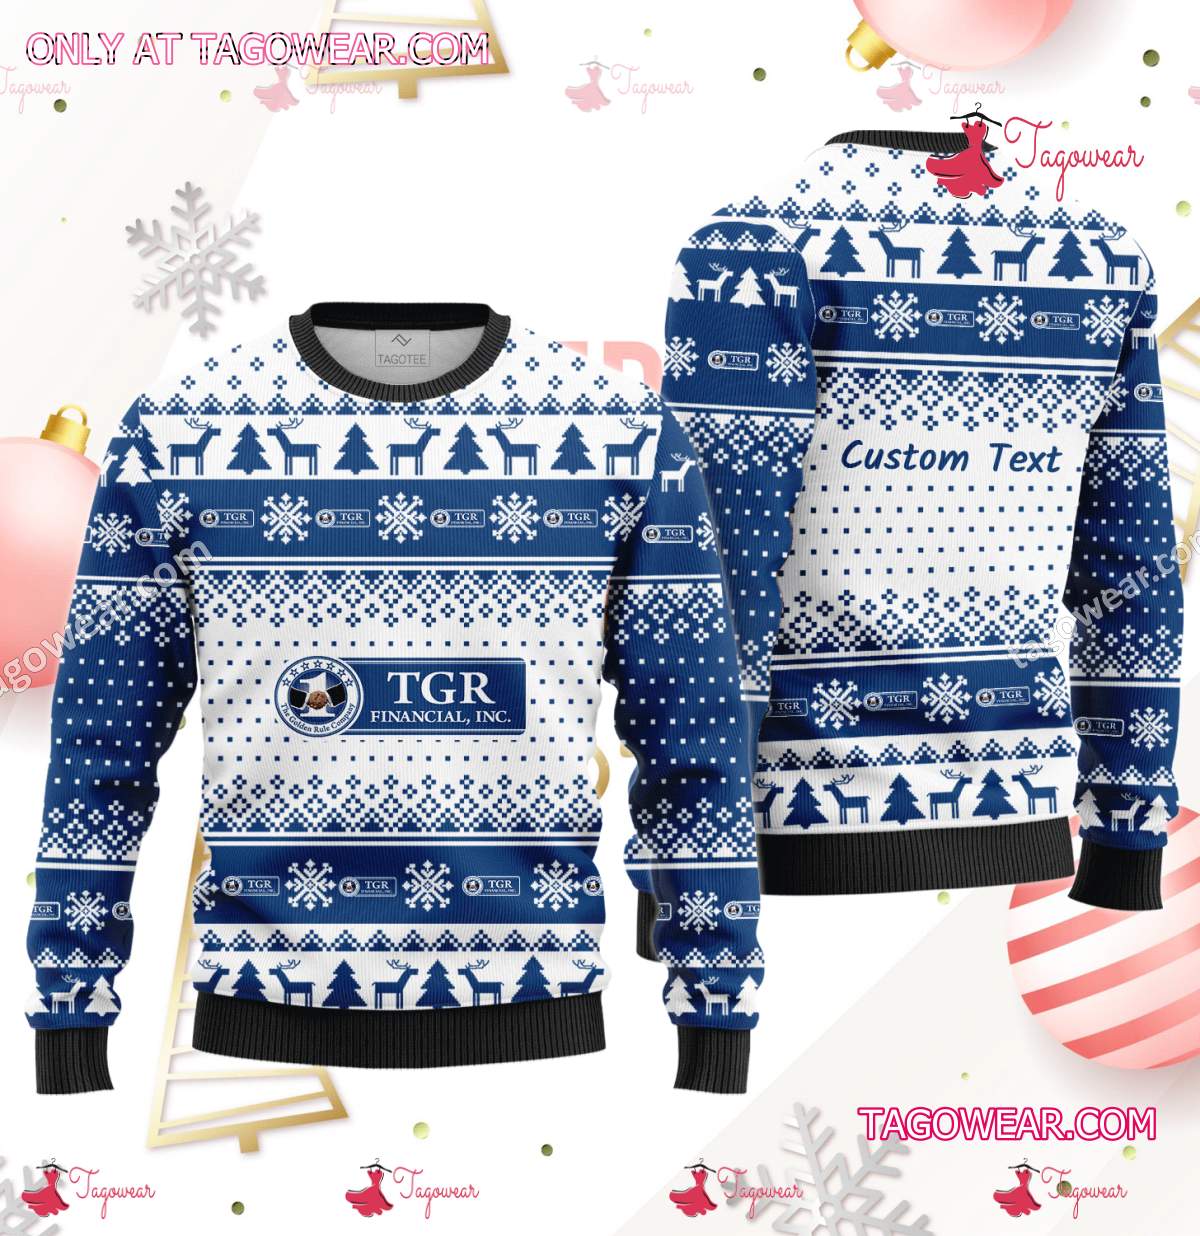 TGR Financial, Inc. Christmas Holiday Sweaters